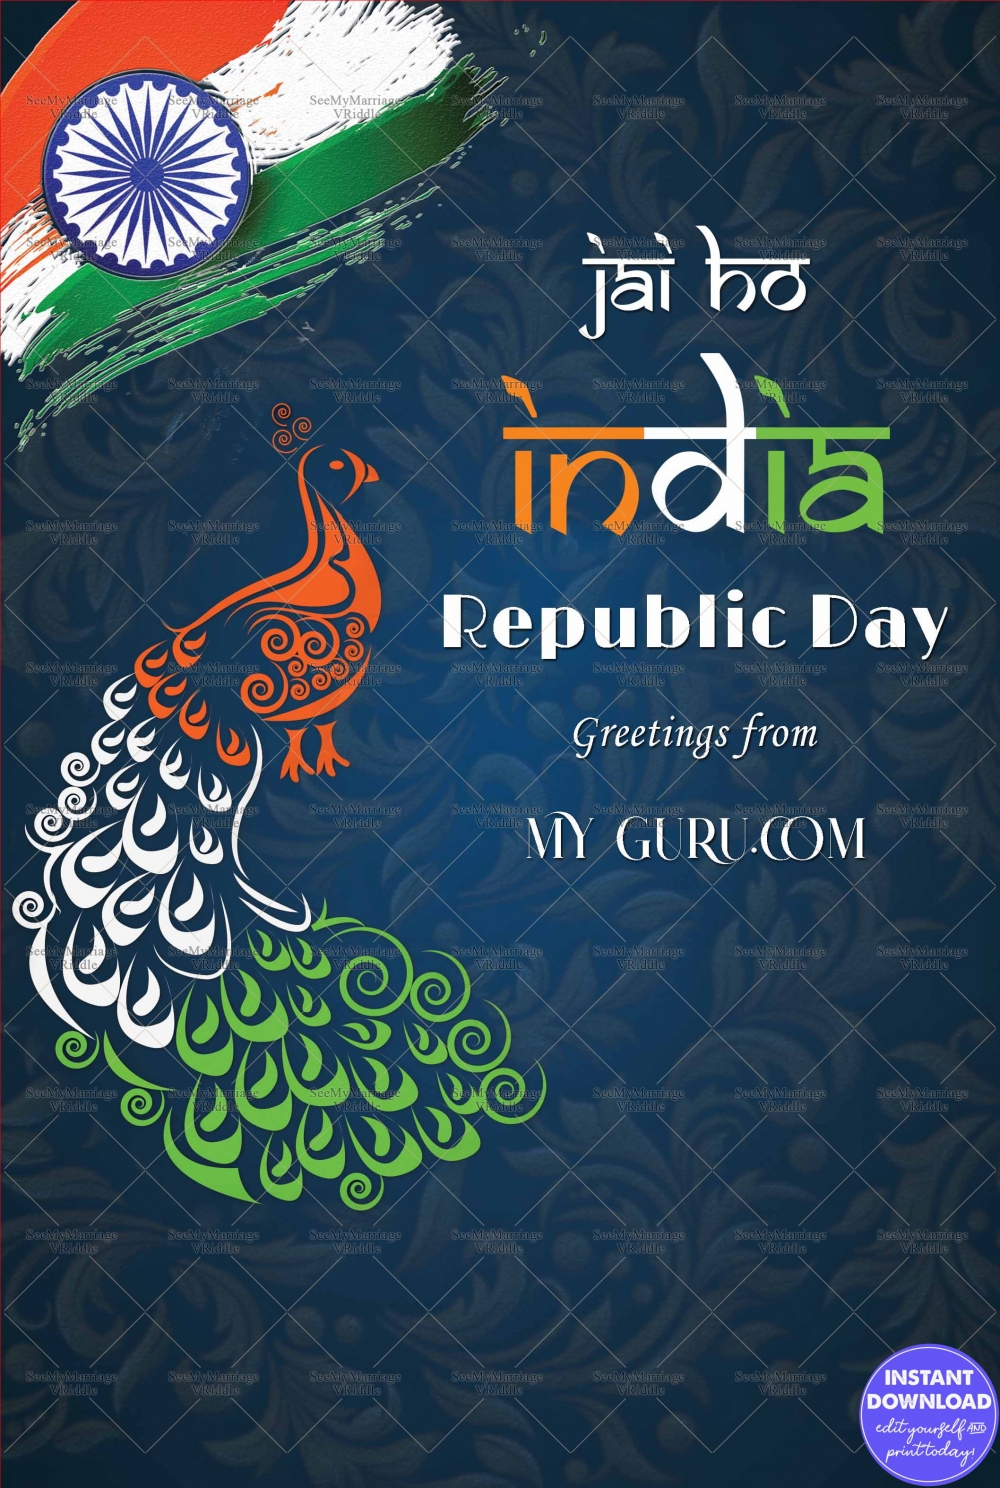 Jai Ho India Peacock theme Republic Day Greeting Card